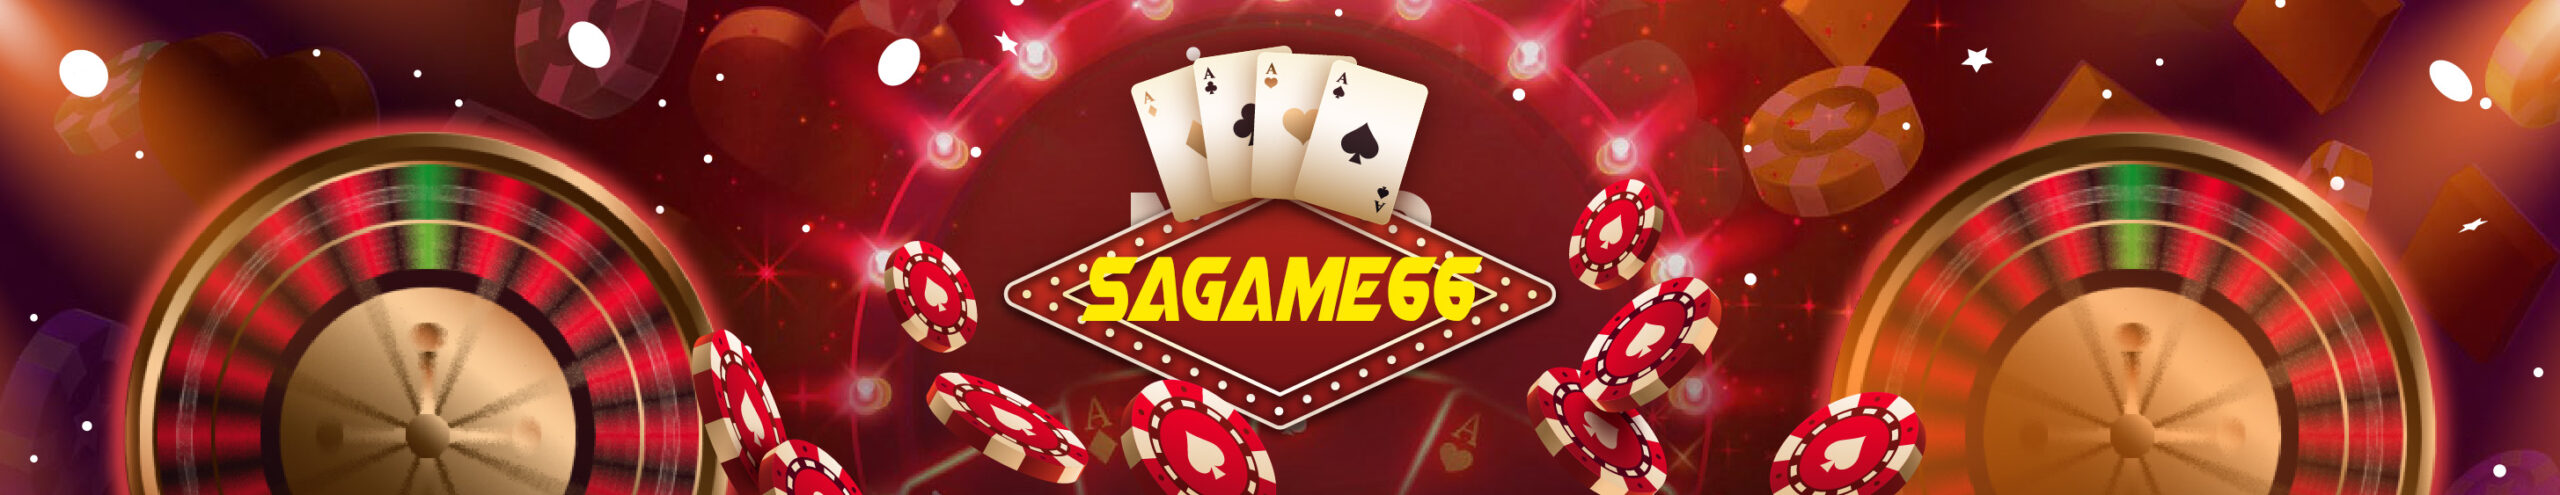 sagame66-2